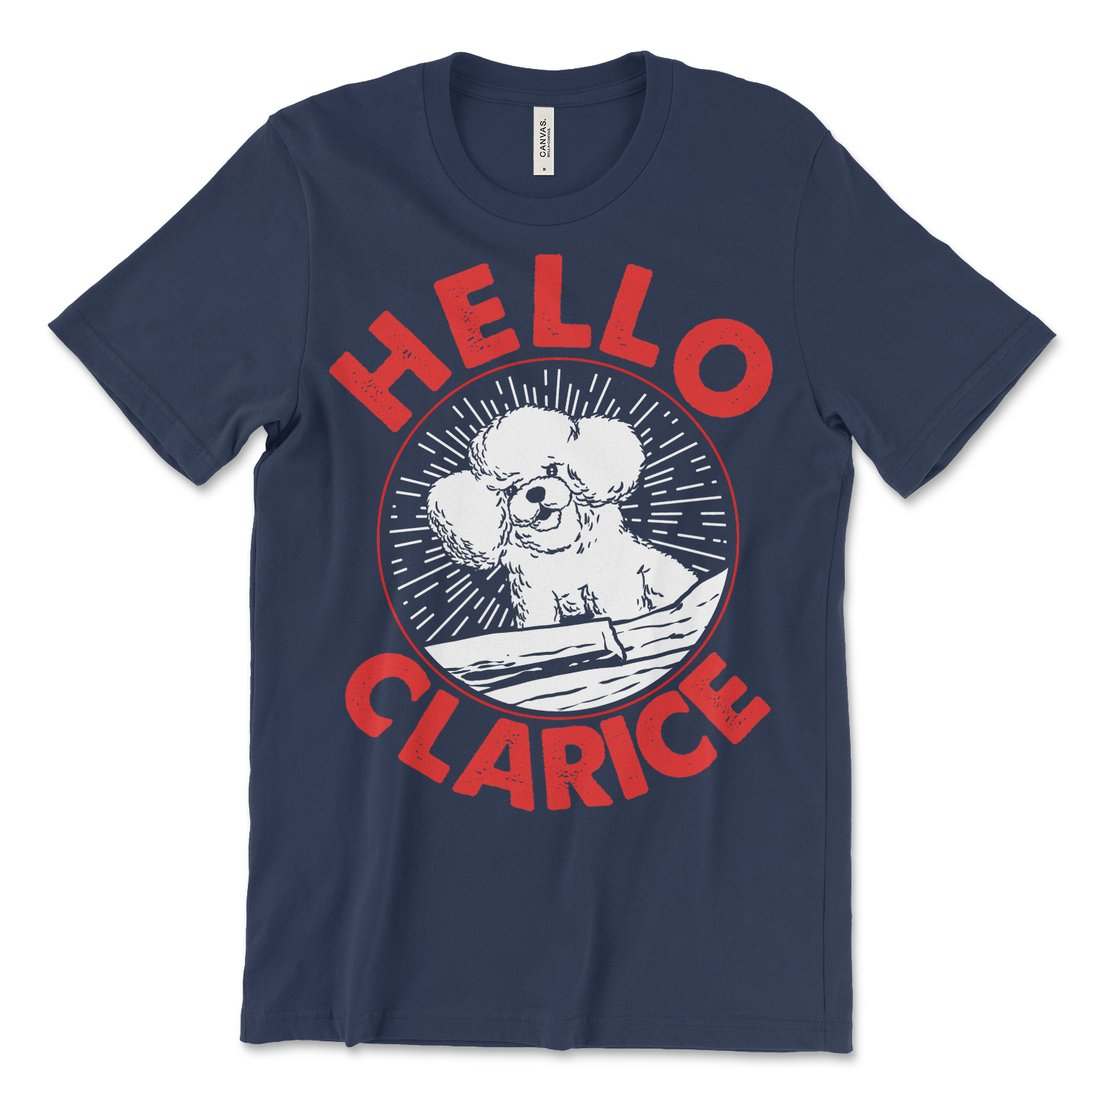 Hello clarice - The silence of the lambs, dog meeme